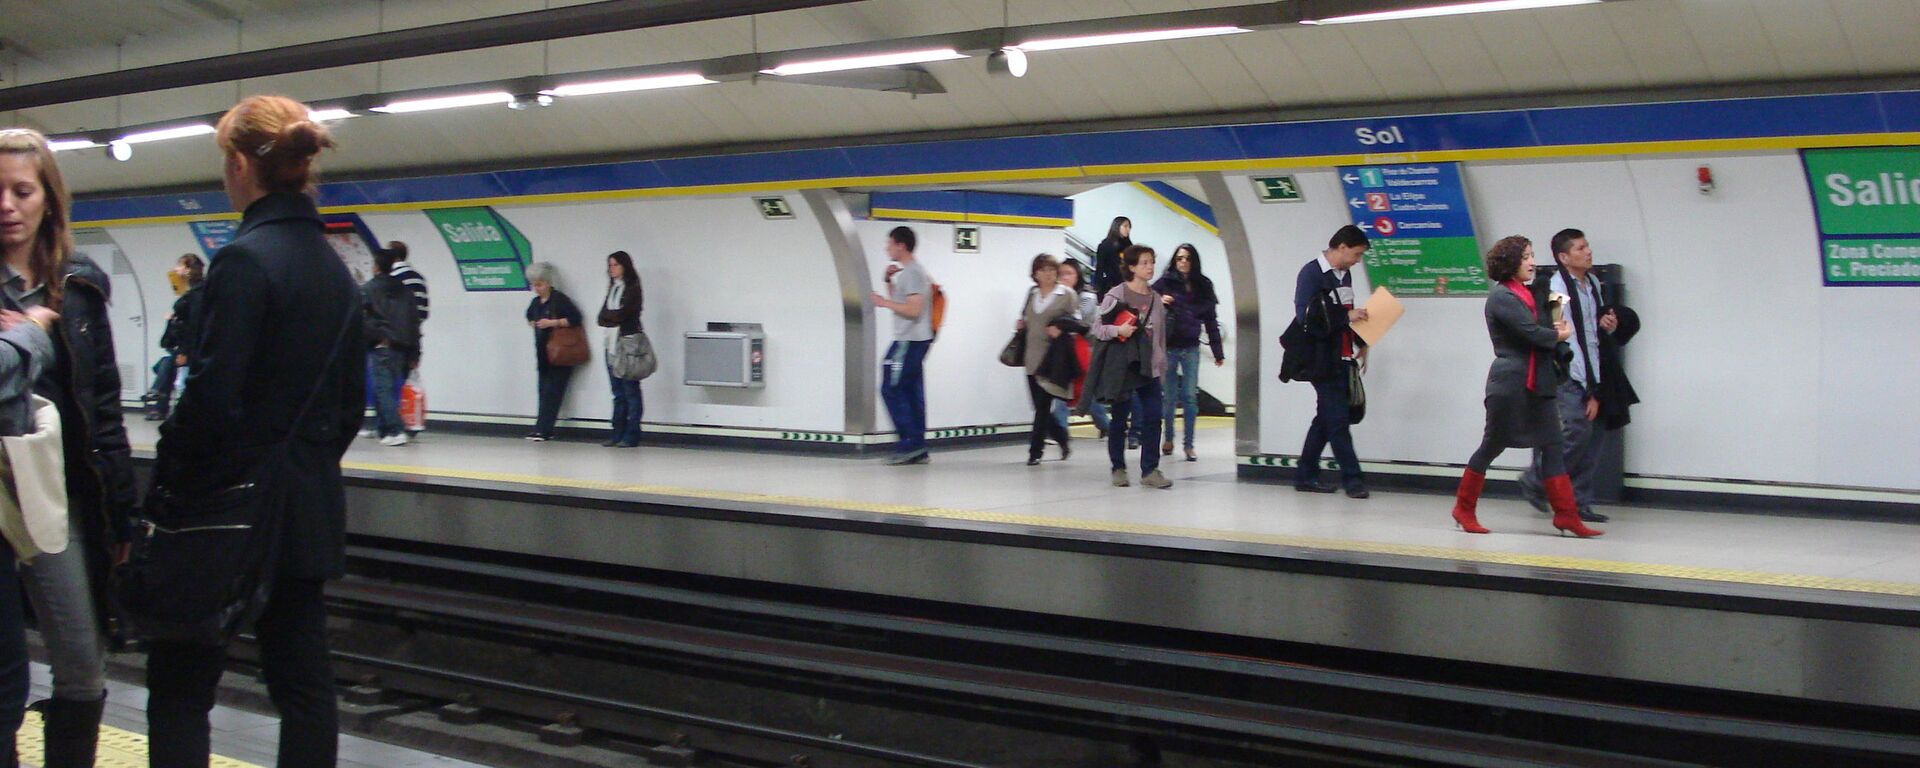 Metro de Madrid (imagen referencial) - Sputnik Mundo, 1920, 28.07.2020